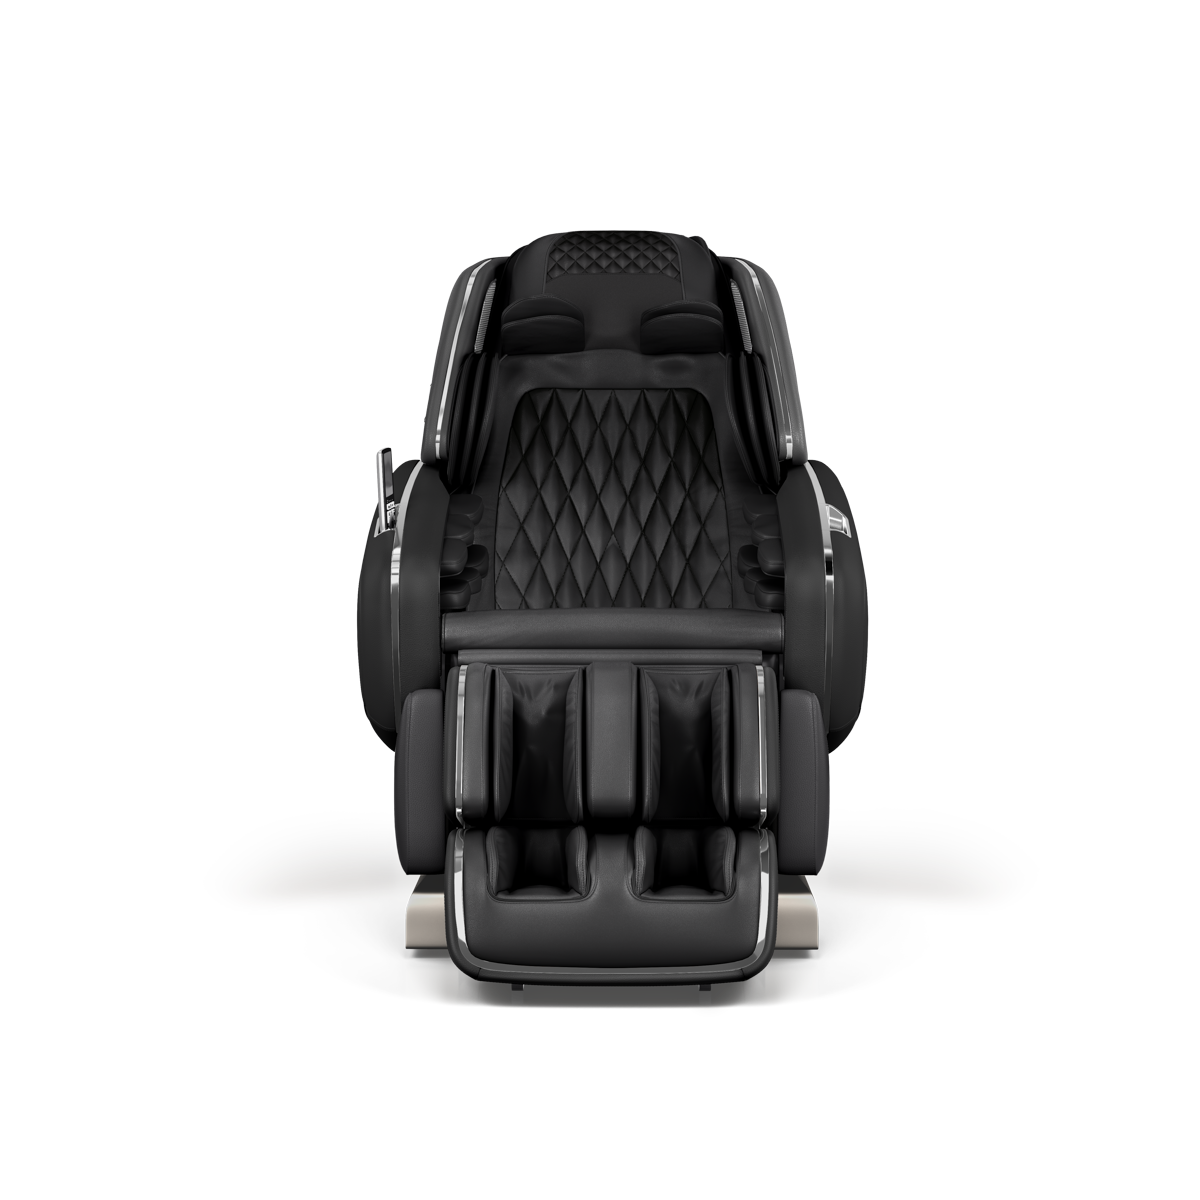 OHCO M.8 NEO Massage Chair